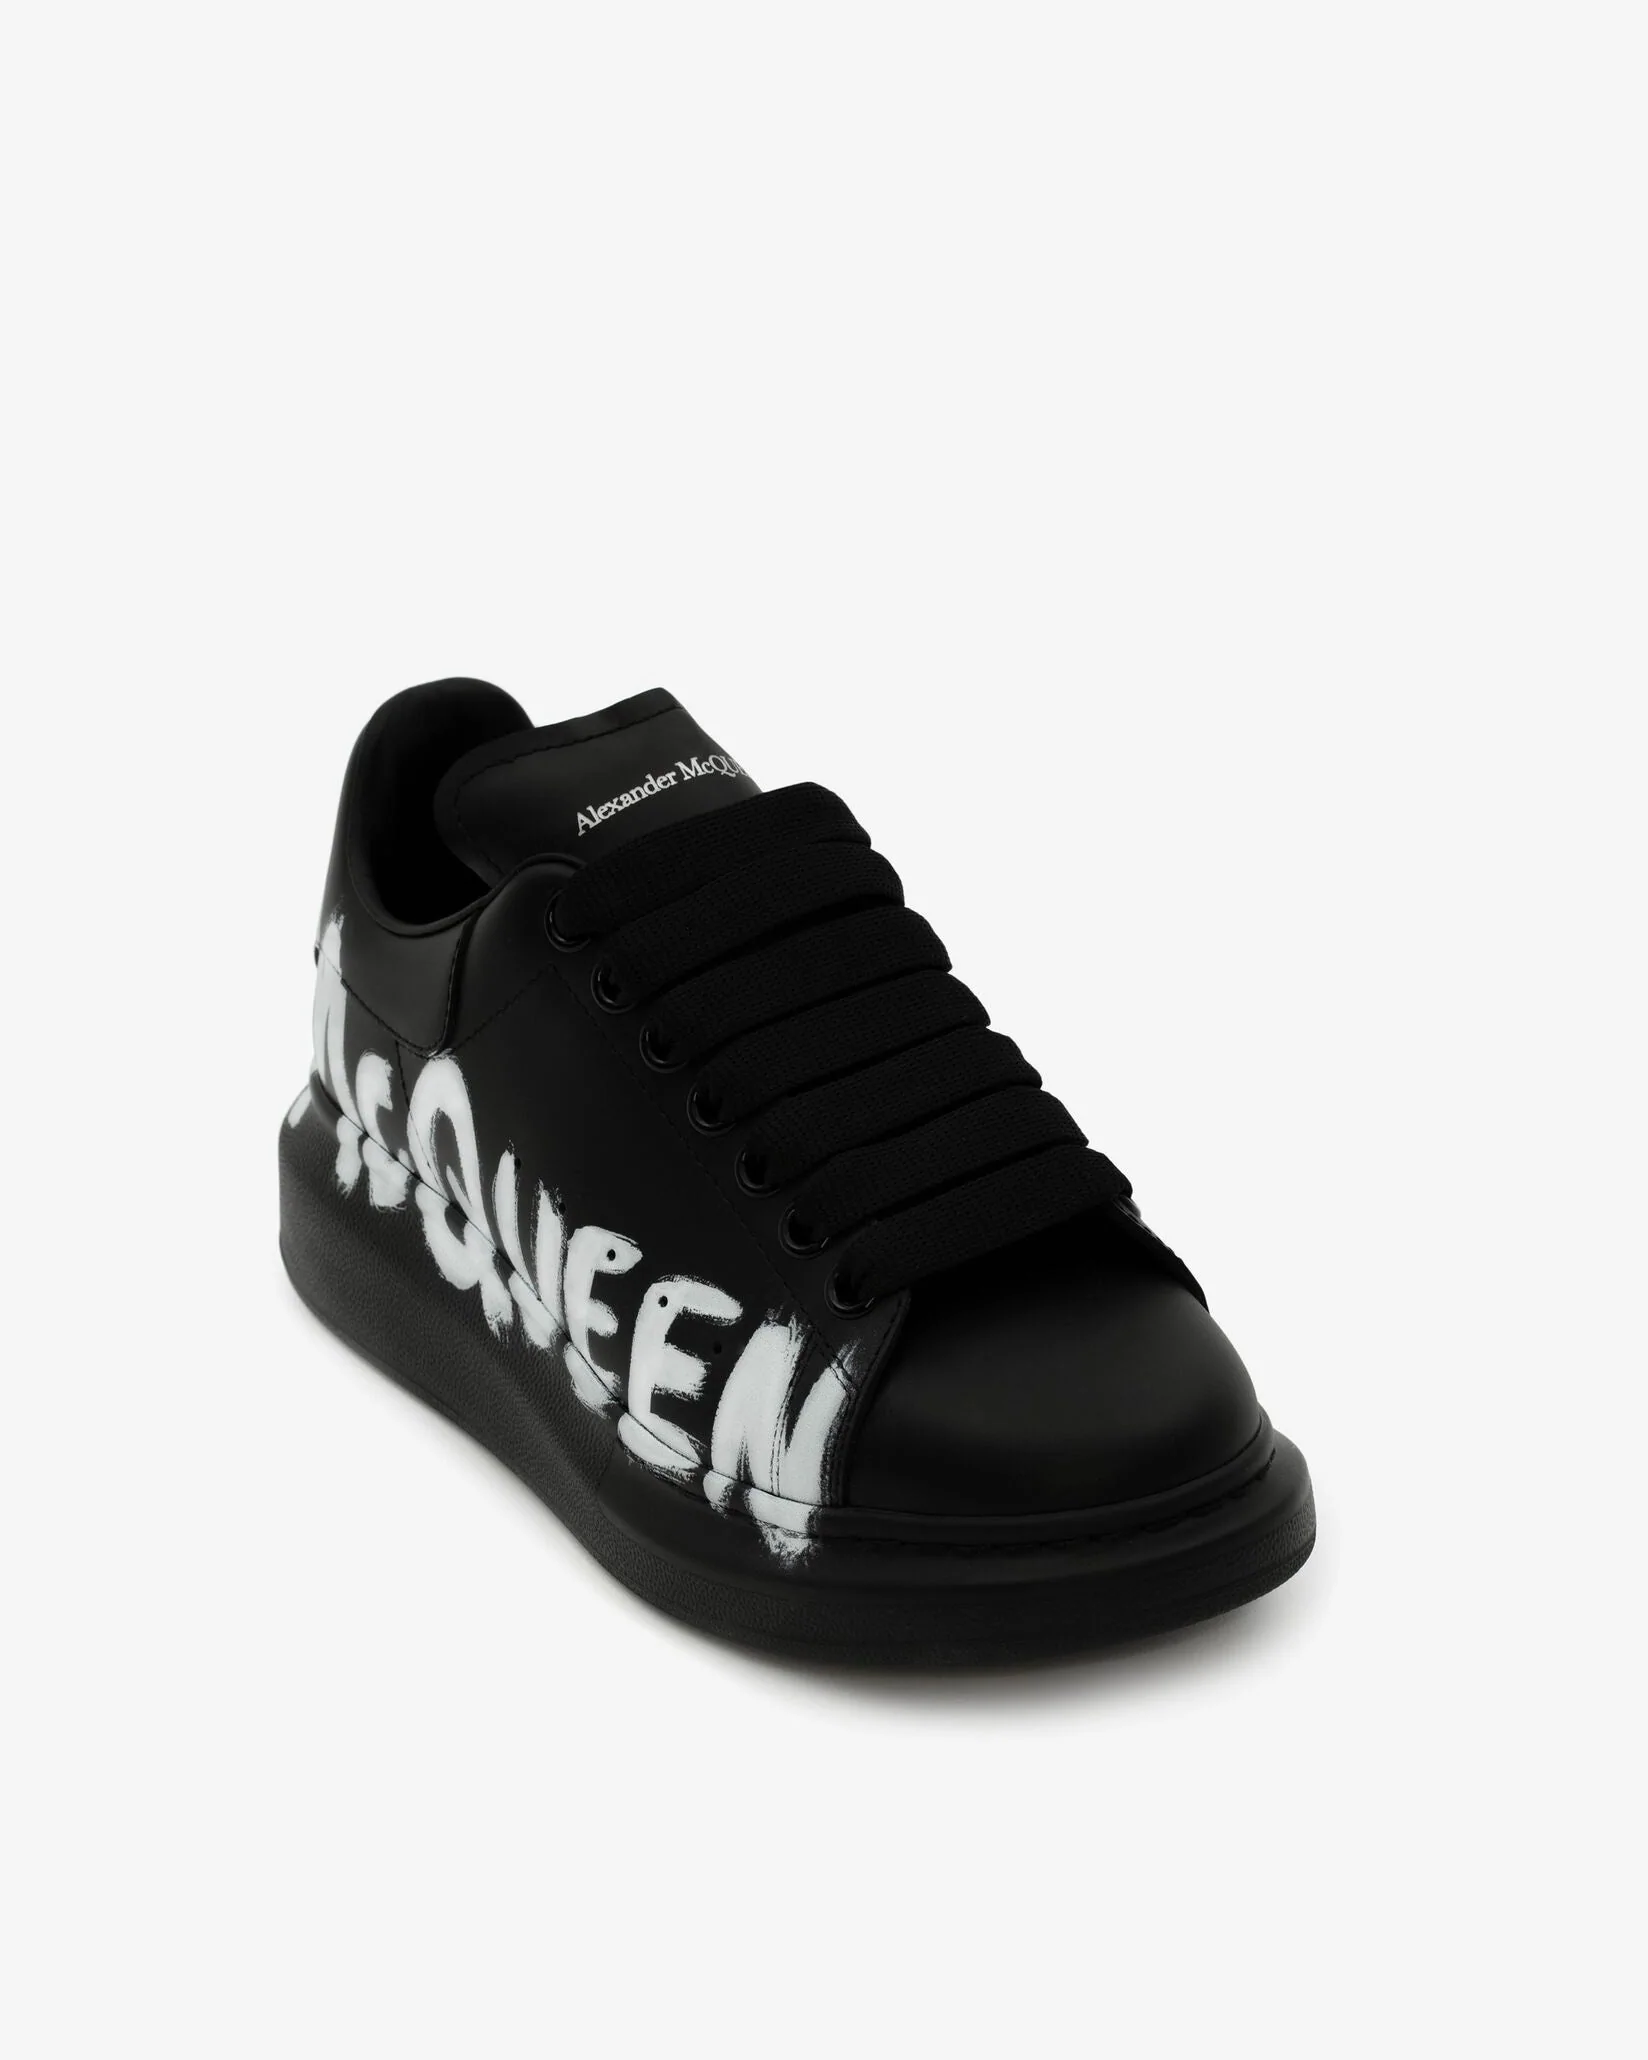 Alexander McQueen Mcqueen Graffiti Oversized Sneaker in Black/White